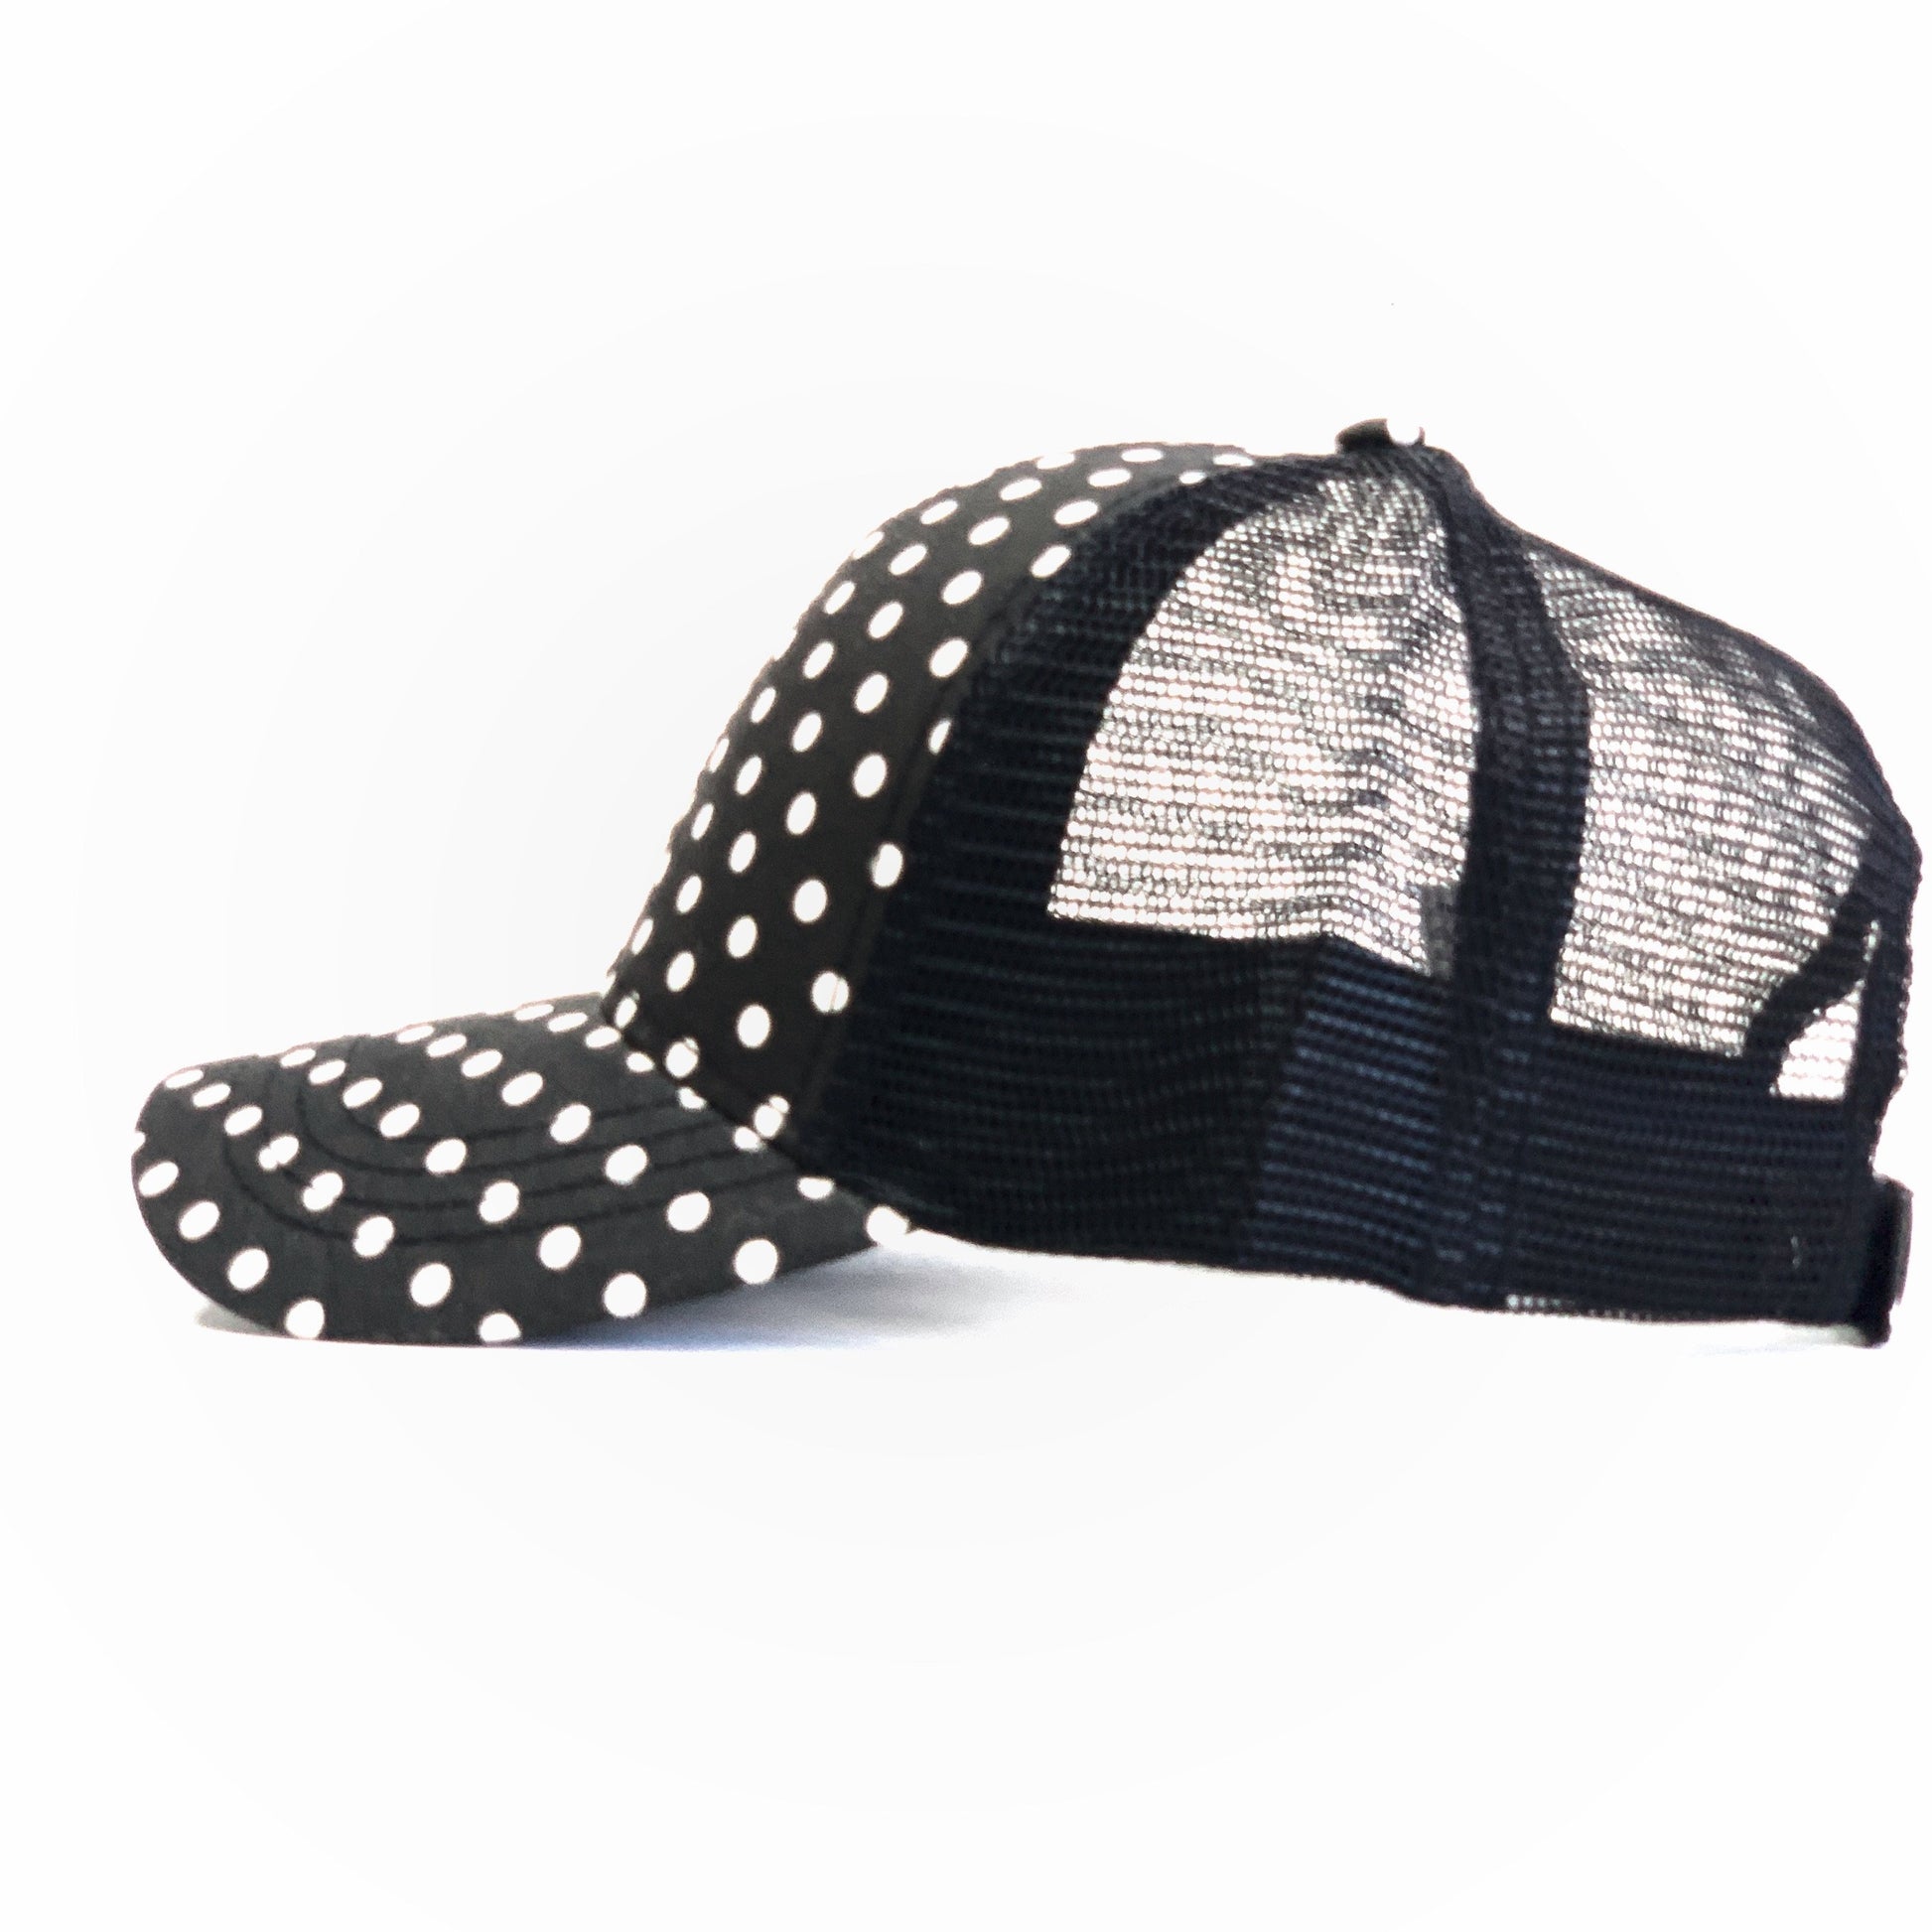 black with white polka dot hat with black mesh back.